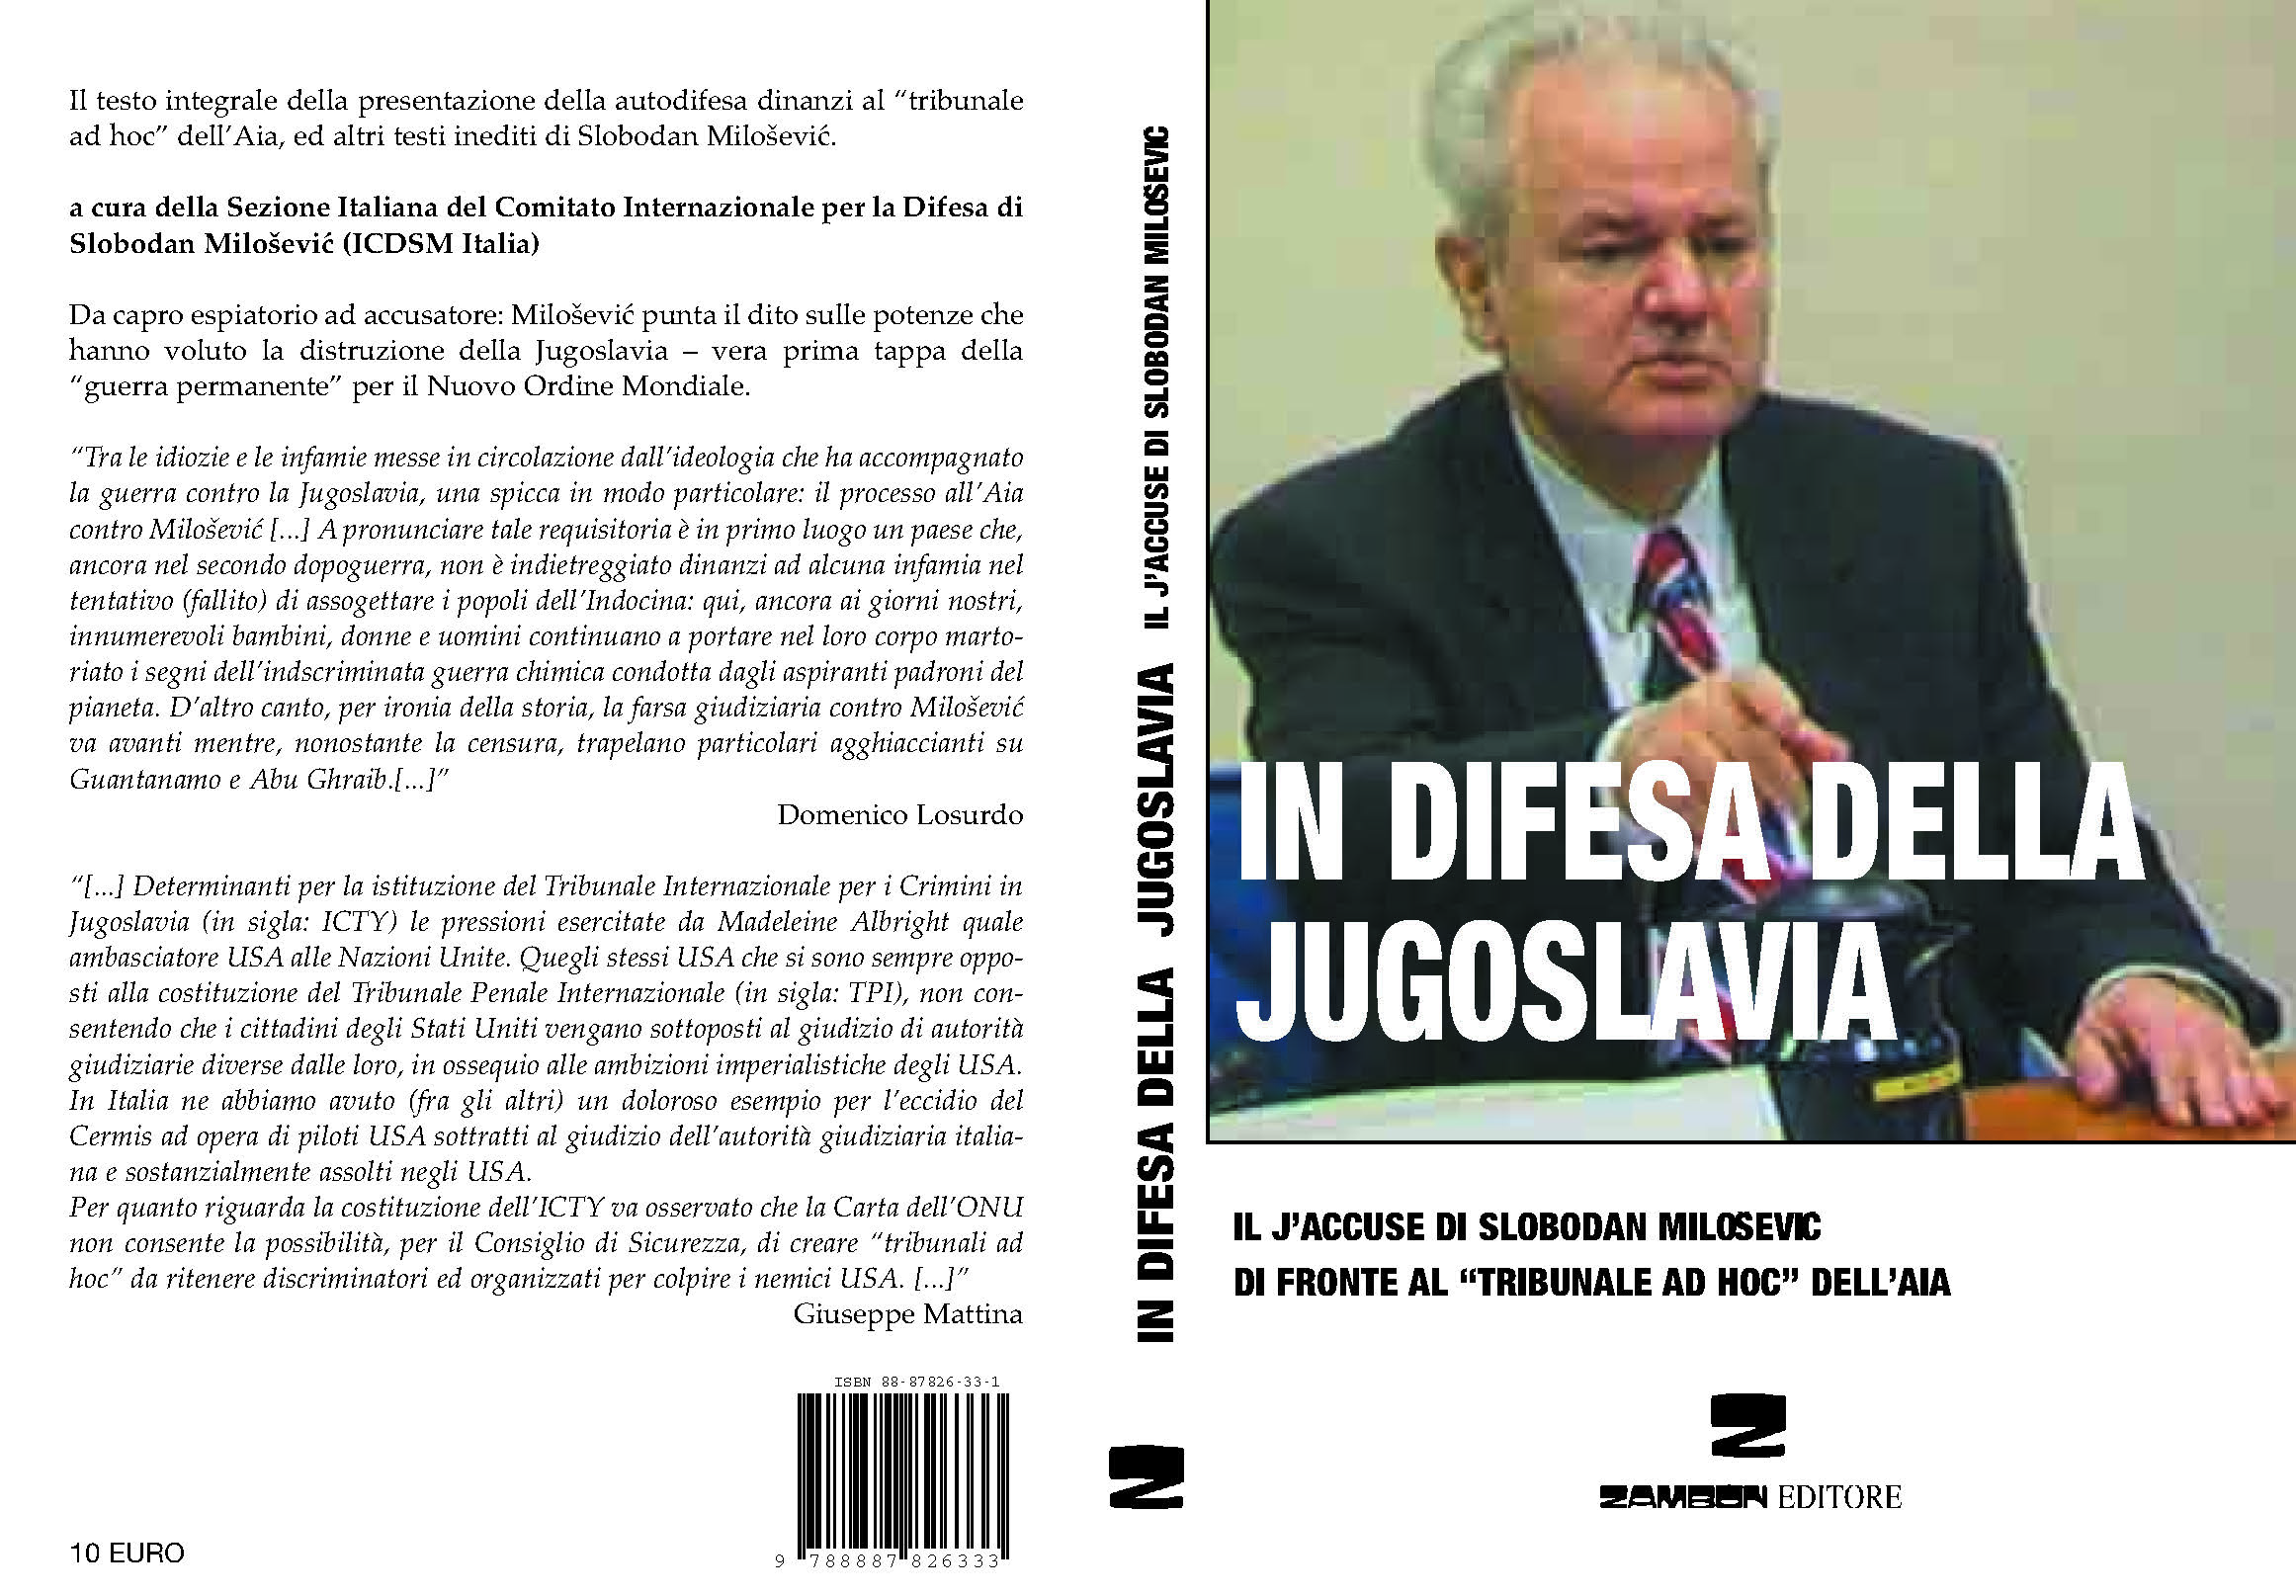 Scheda del libro "In difesa
                                della Jugoslavia"